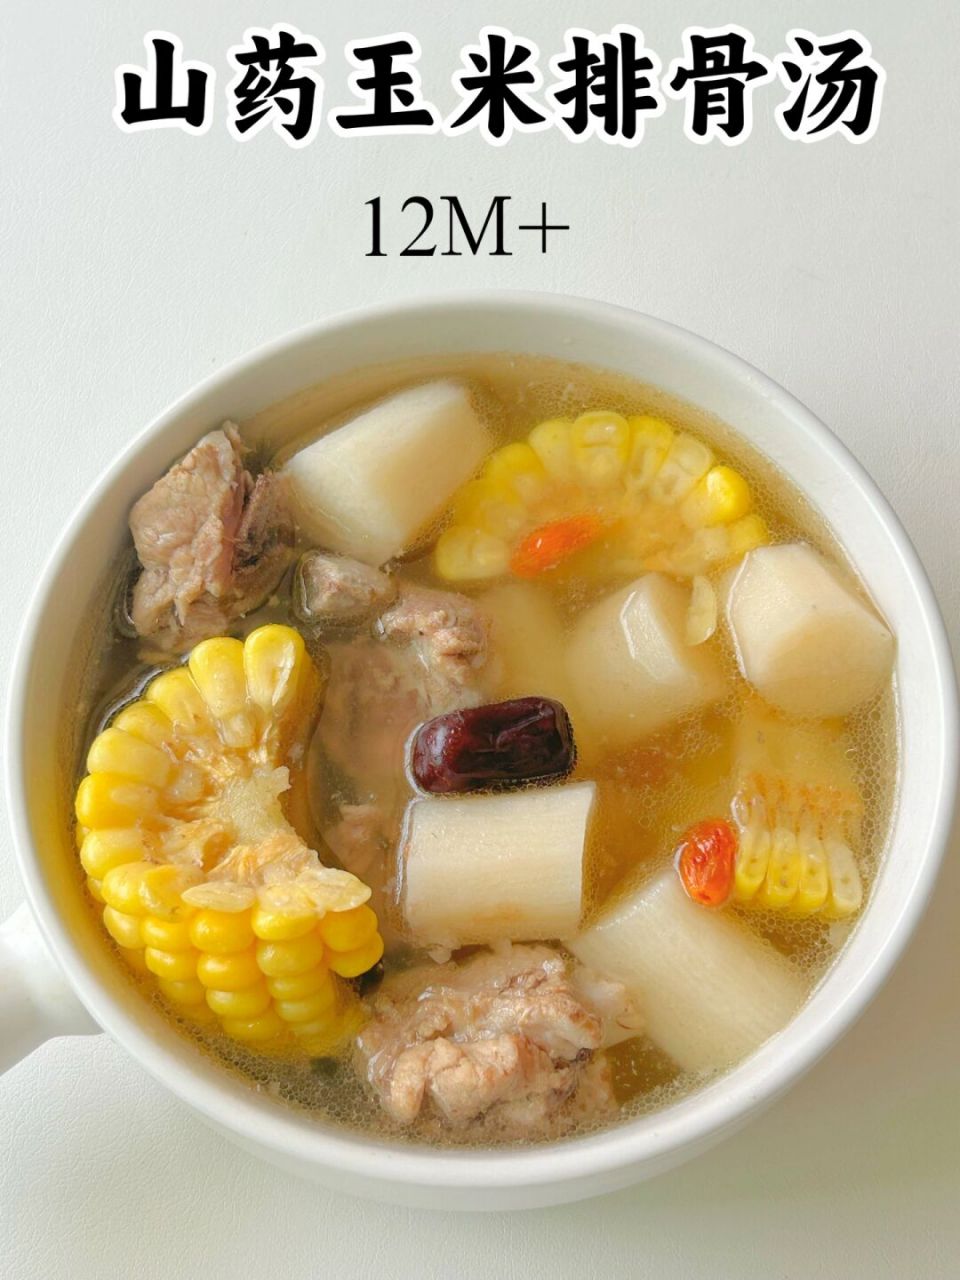 12m 山药玉米炖排骨73汤鲜味美 营养又好喝7515 今天这个汤可太